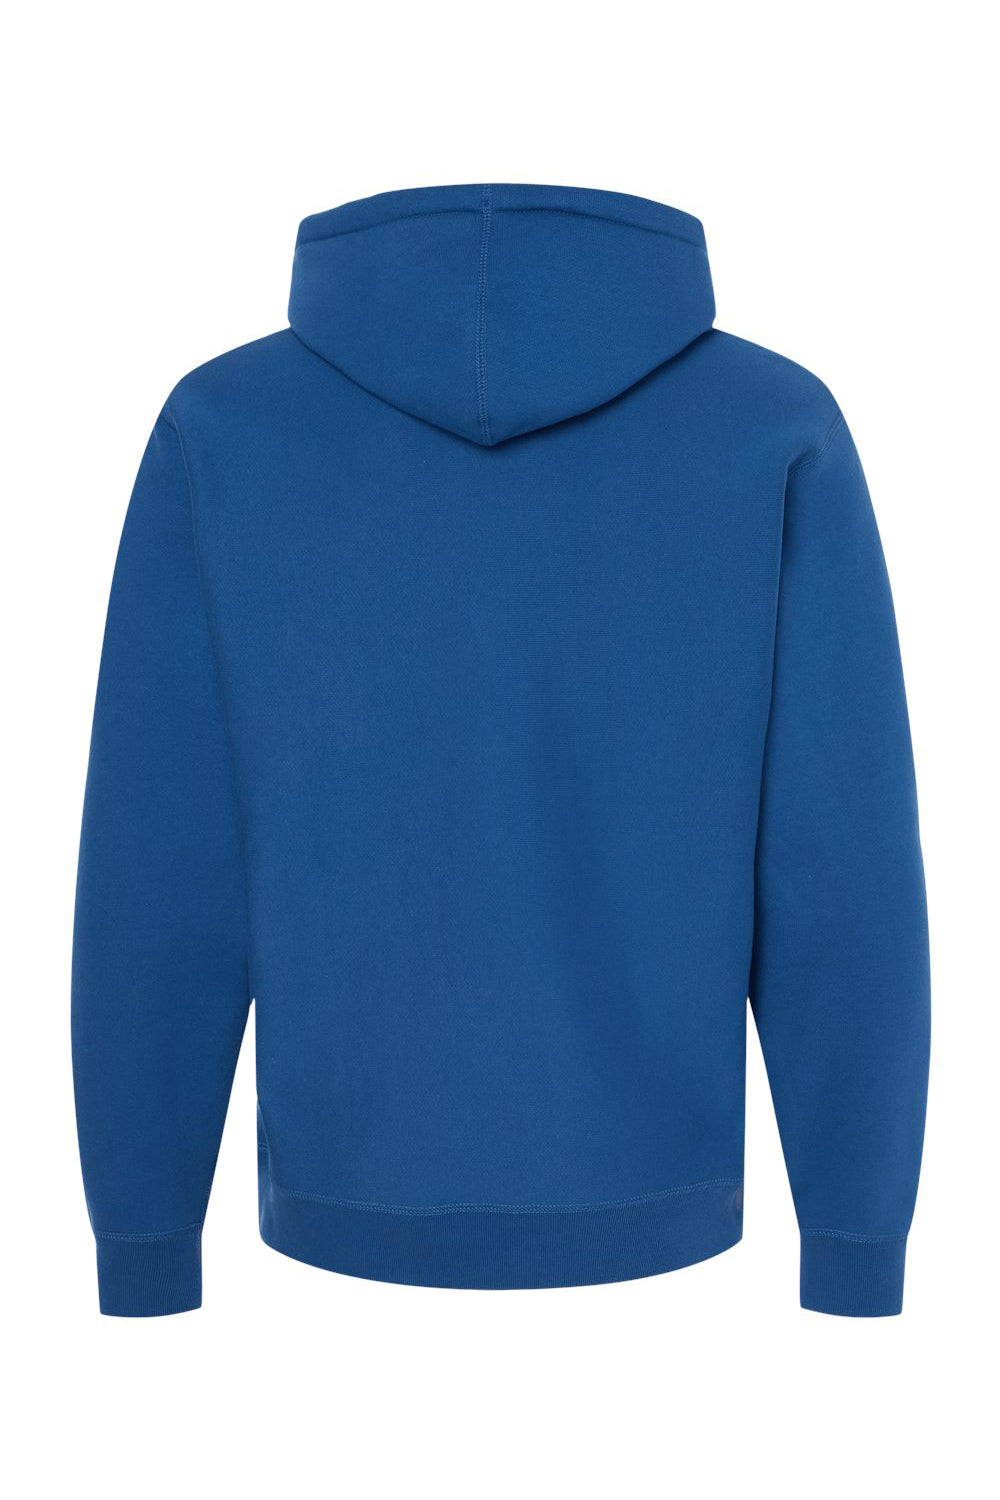 Independent Trading Co. IND5000P Mens Legend Hooded Sweatshirt Hoodie Royal Blue Flat Back